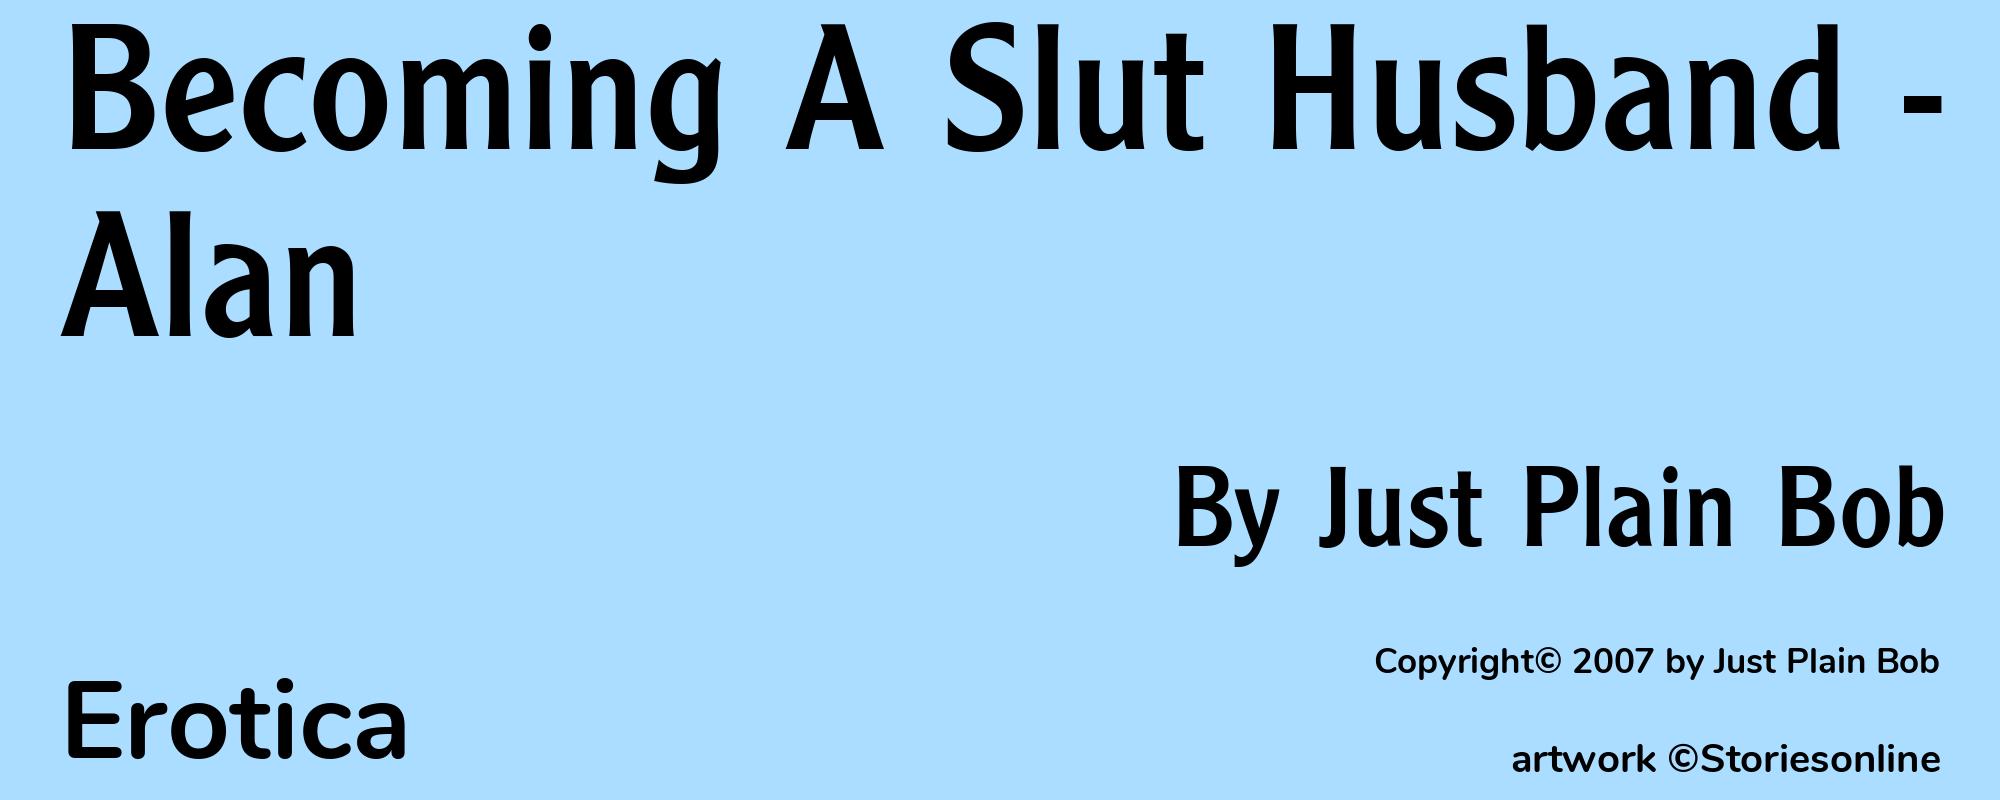 Becoming A Slut Husband - Alan - Cover